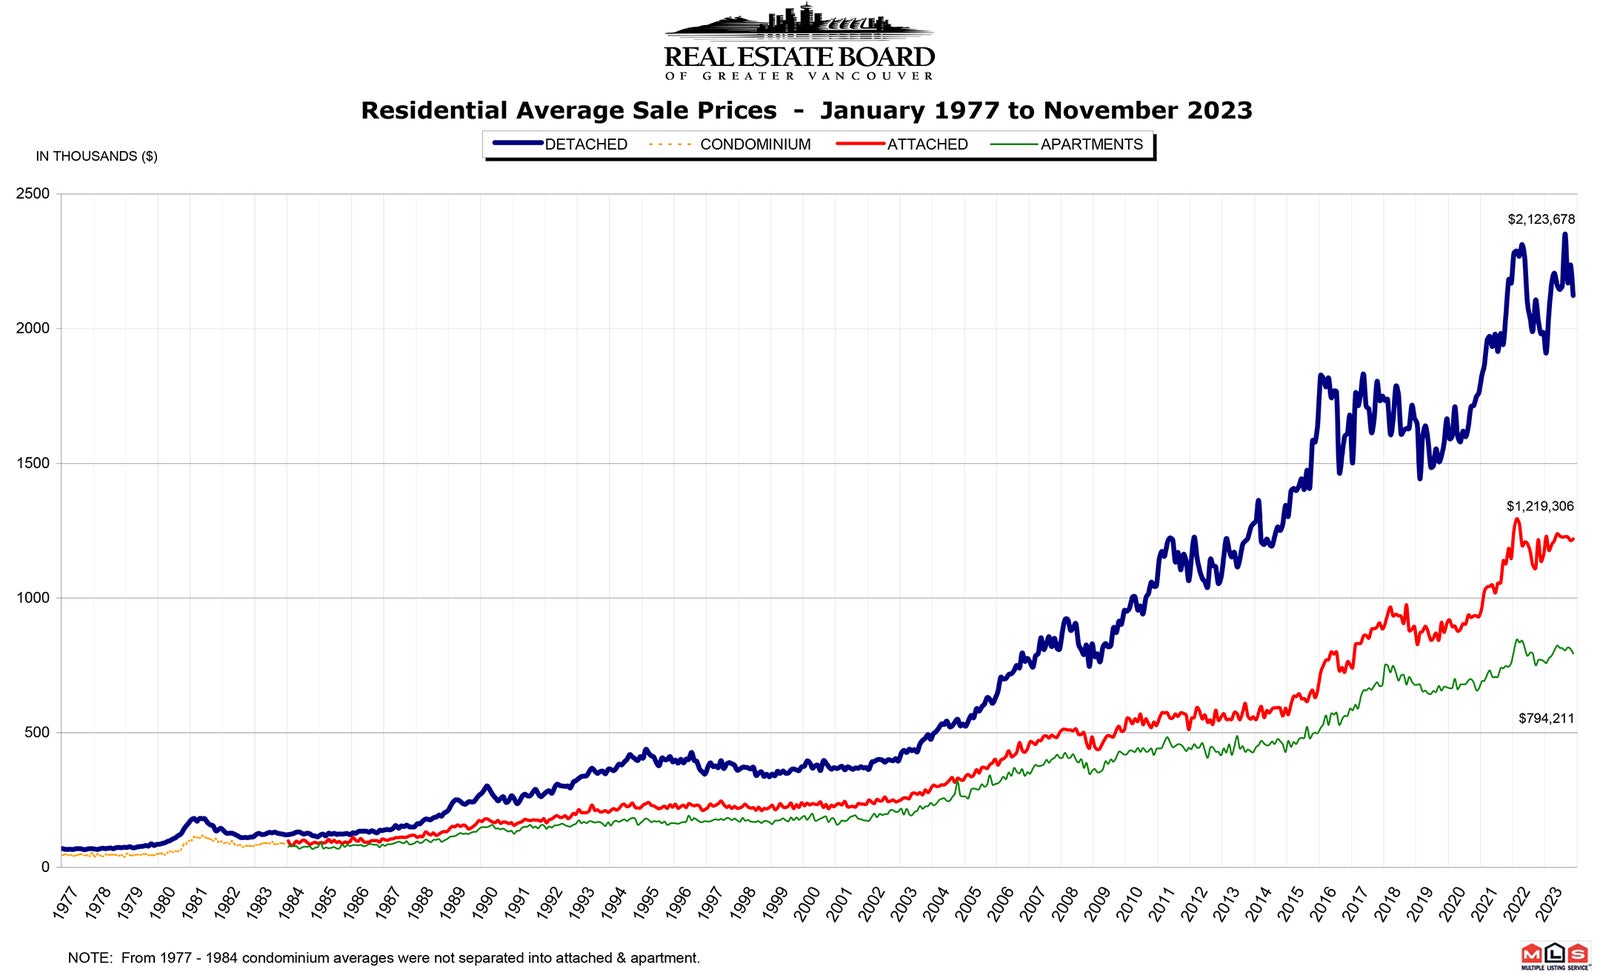 Residential Average Sale Price RASP October 2023 Real Estate Vancouver Chris Frederickson